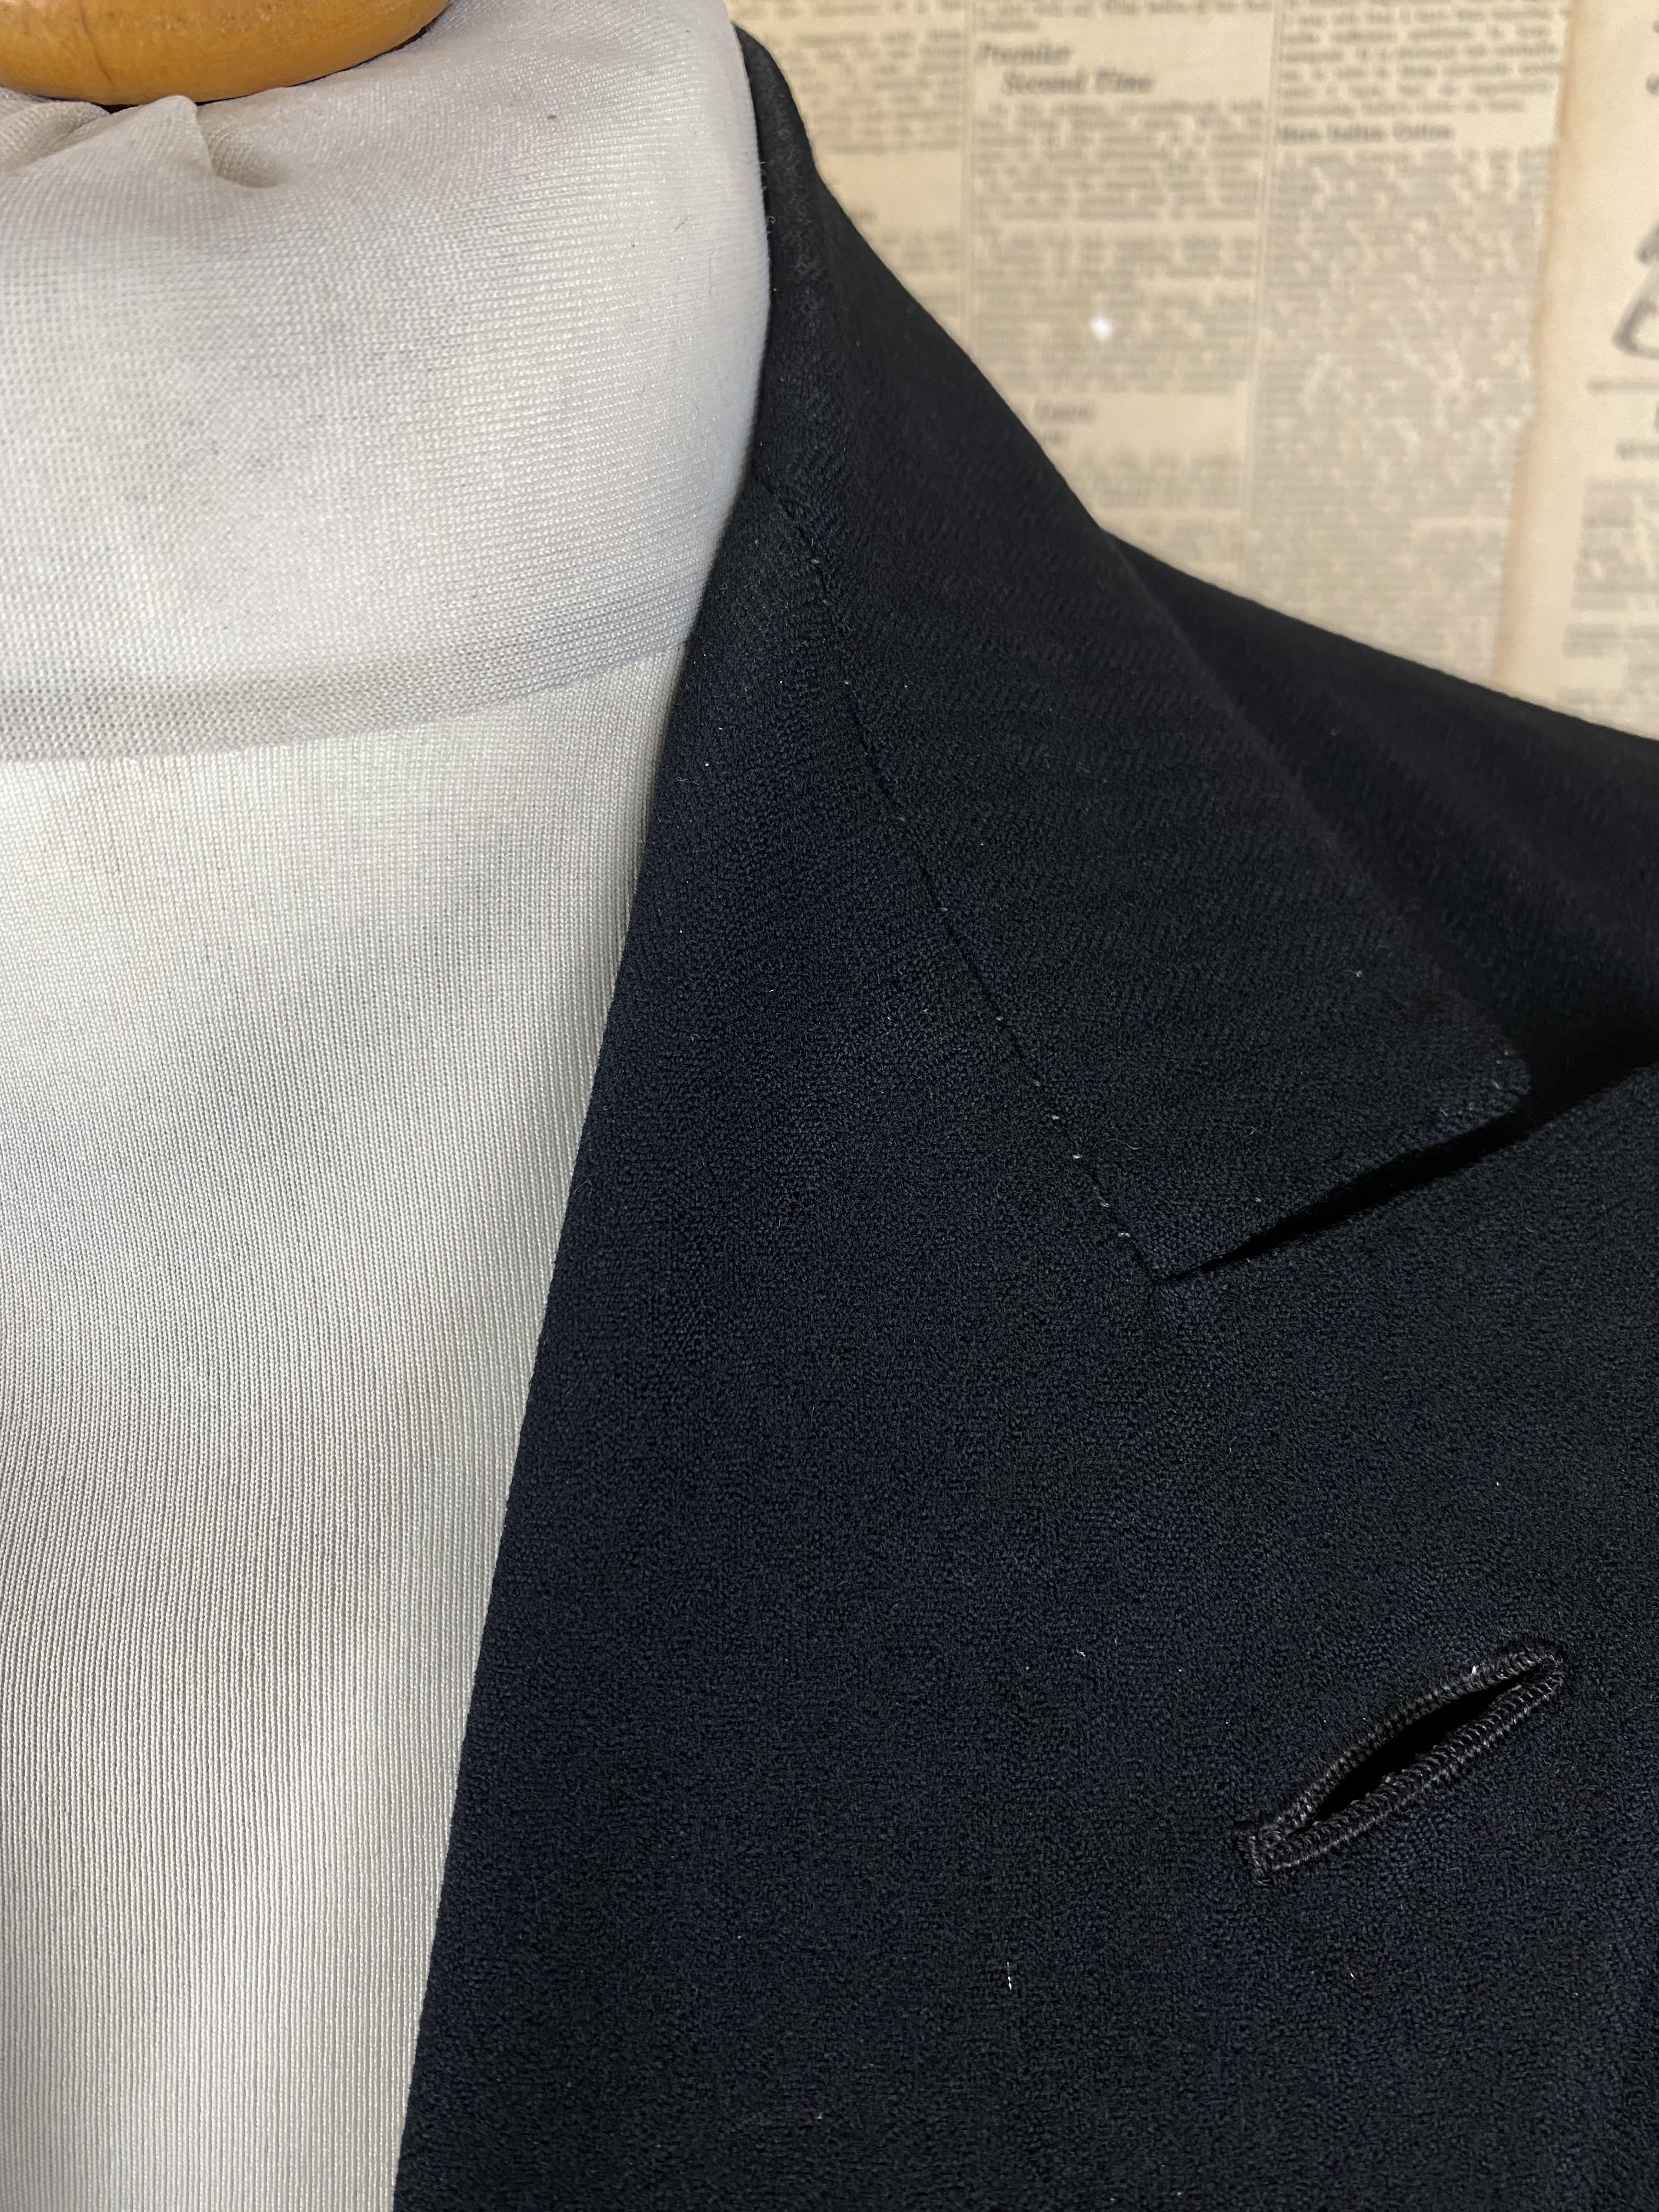 34> Vintage Savile row 1940's morning tailcoat tails coat size 40 regular